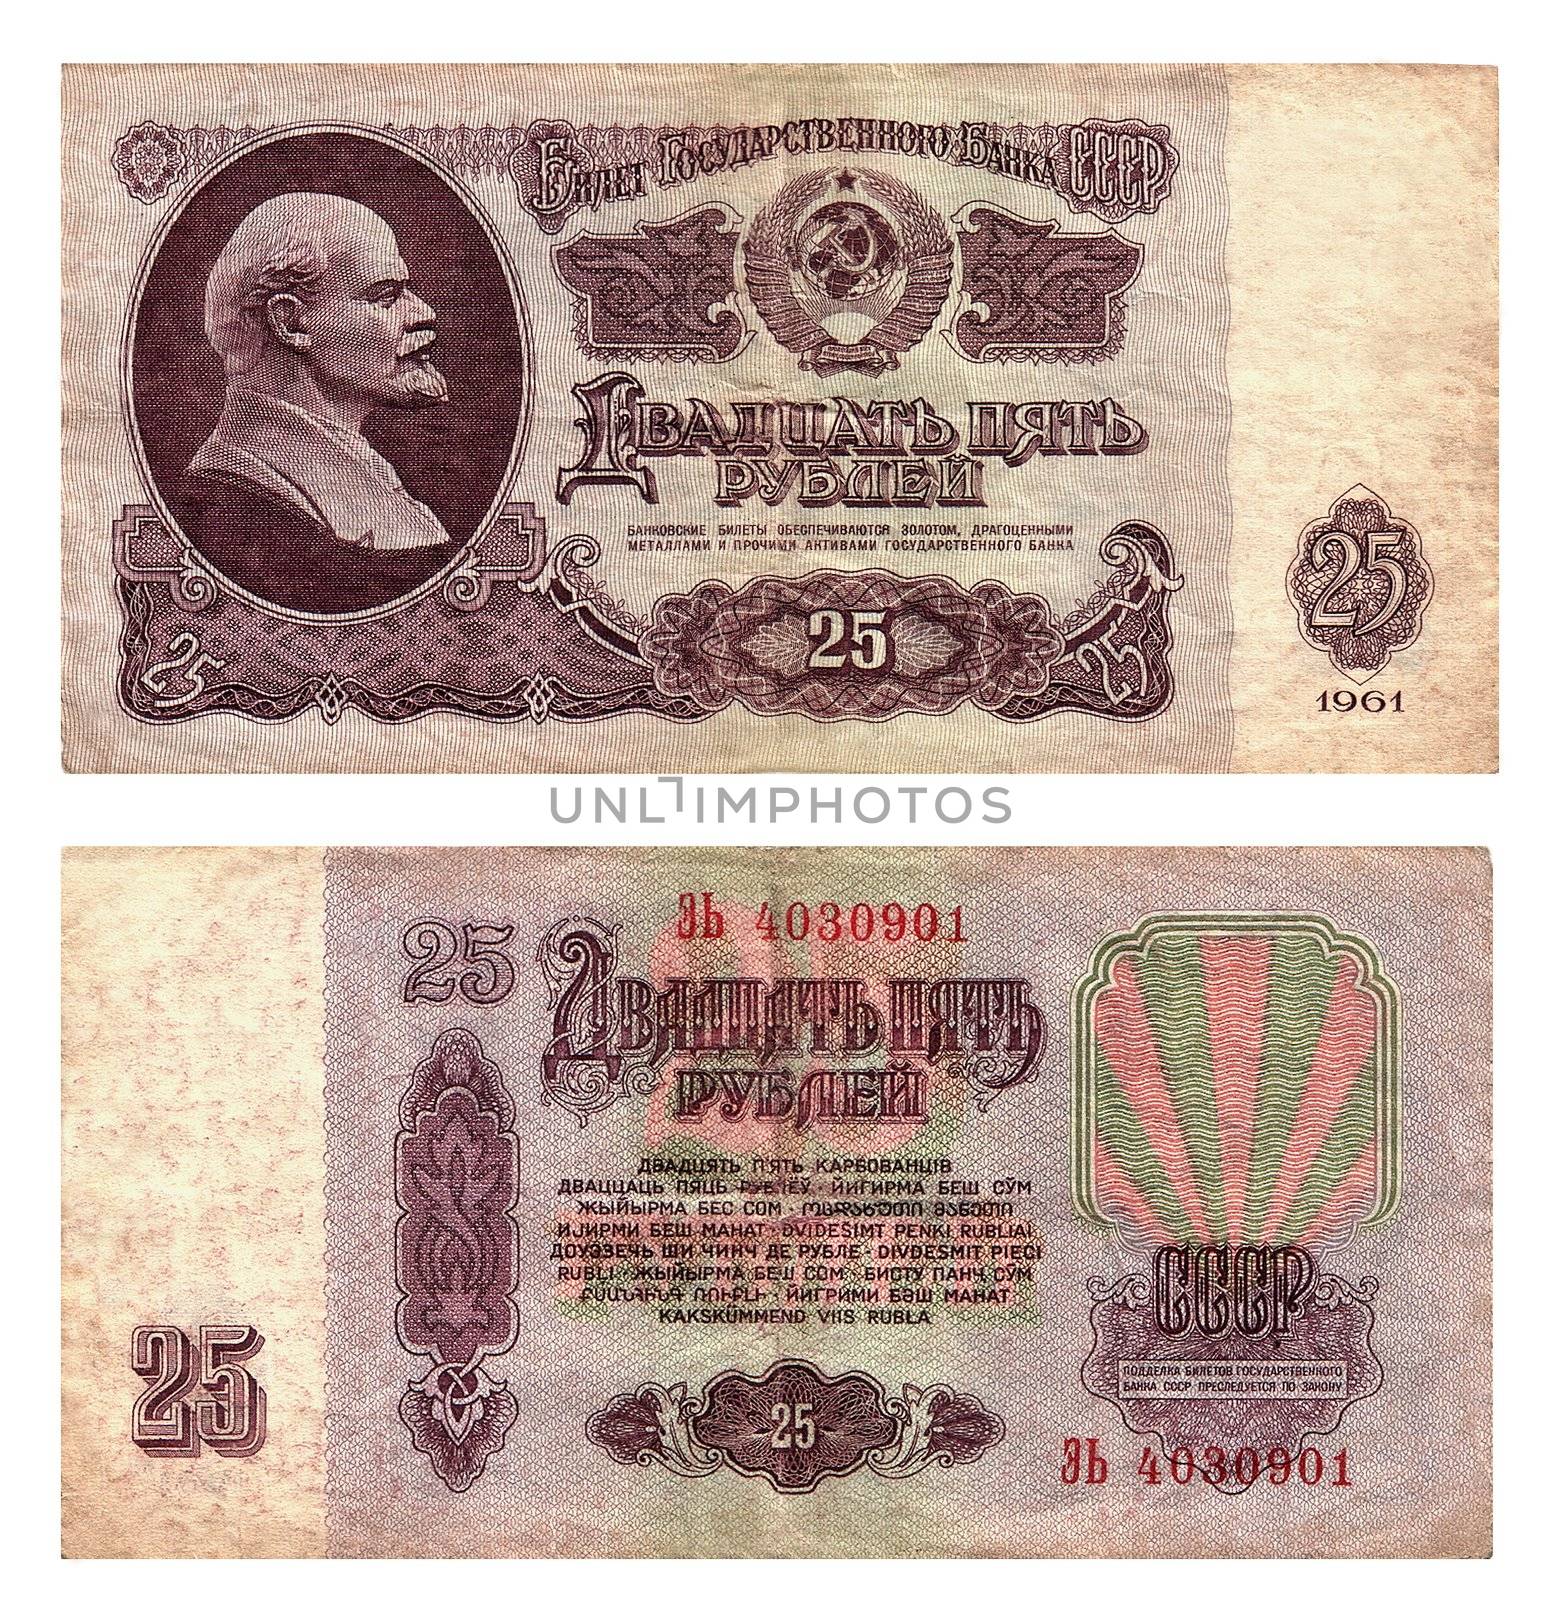 Soviet currency by myyayko